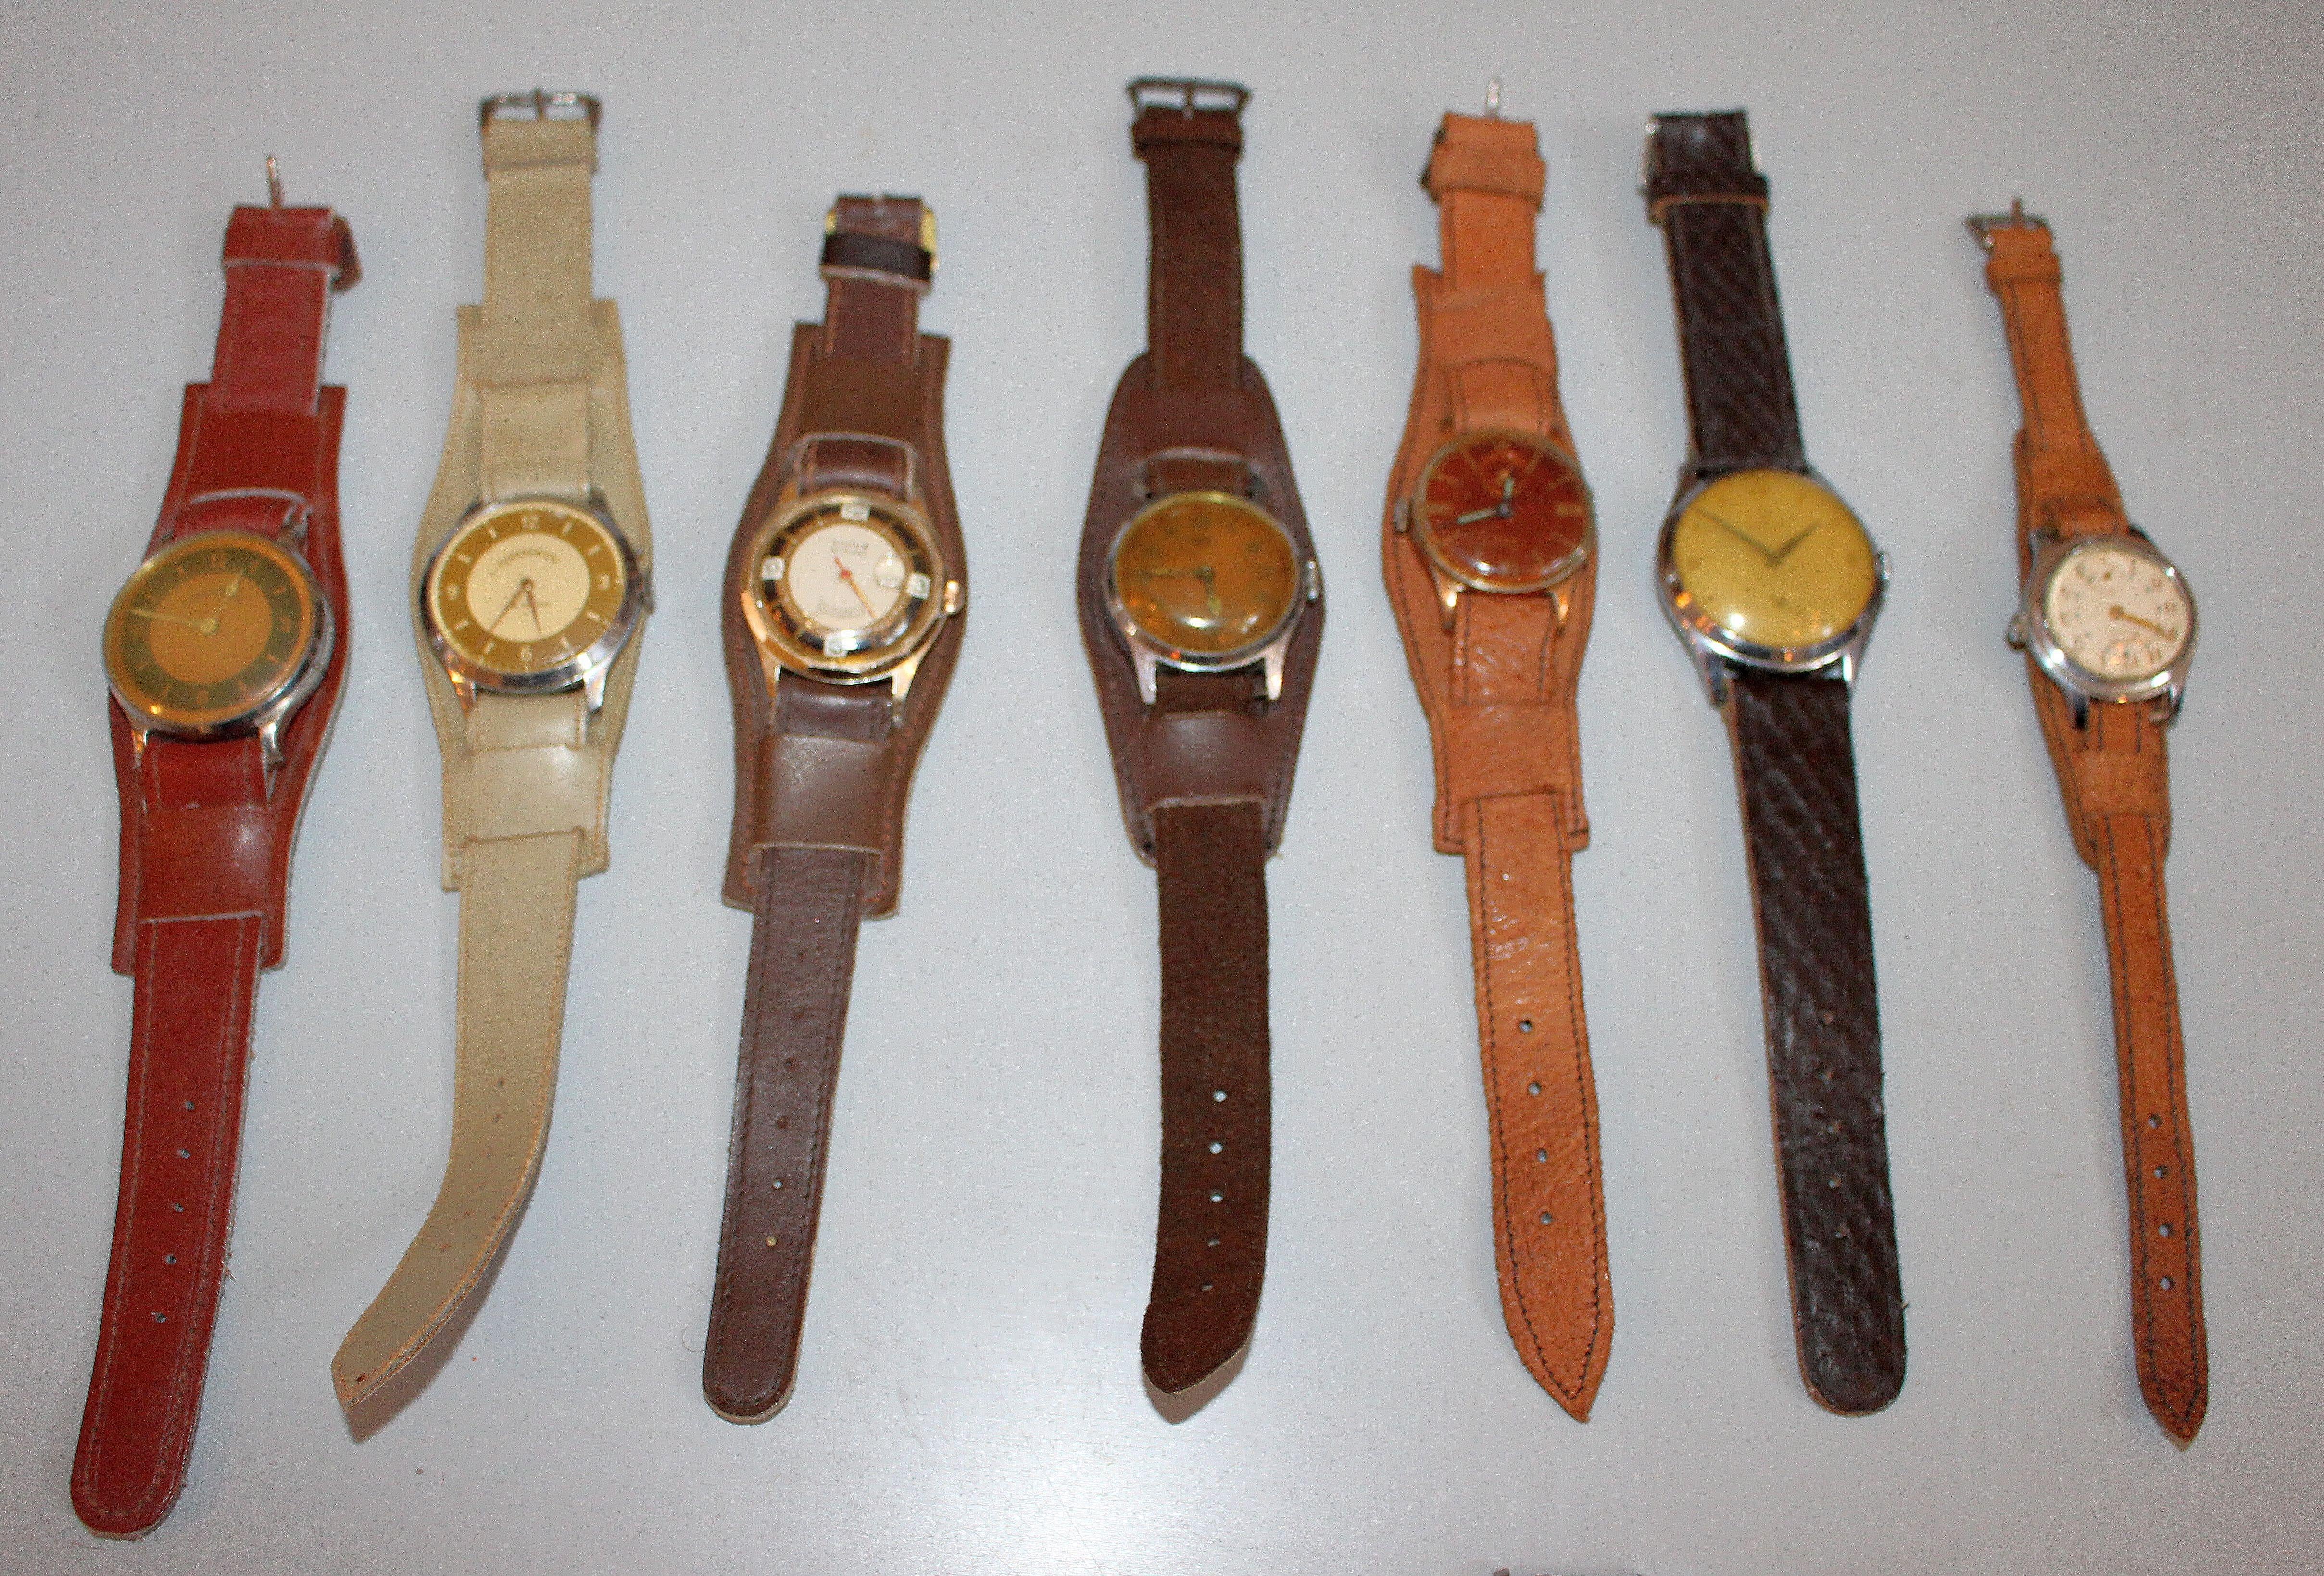 Orion Vintage Watch - 5 For Sale on 1stDibs